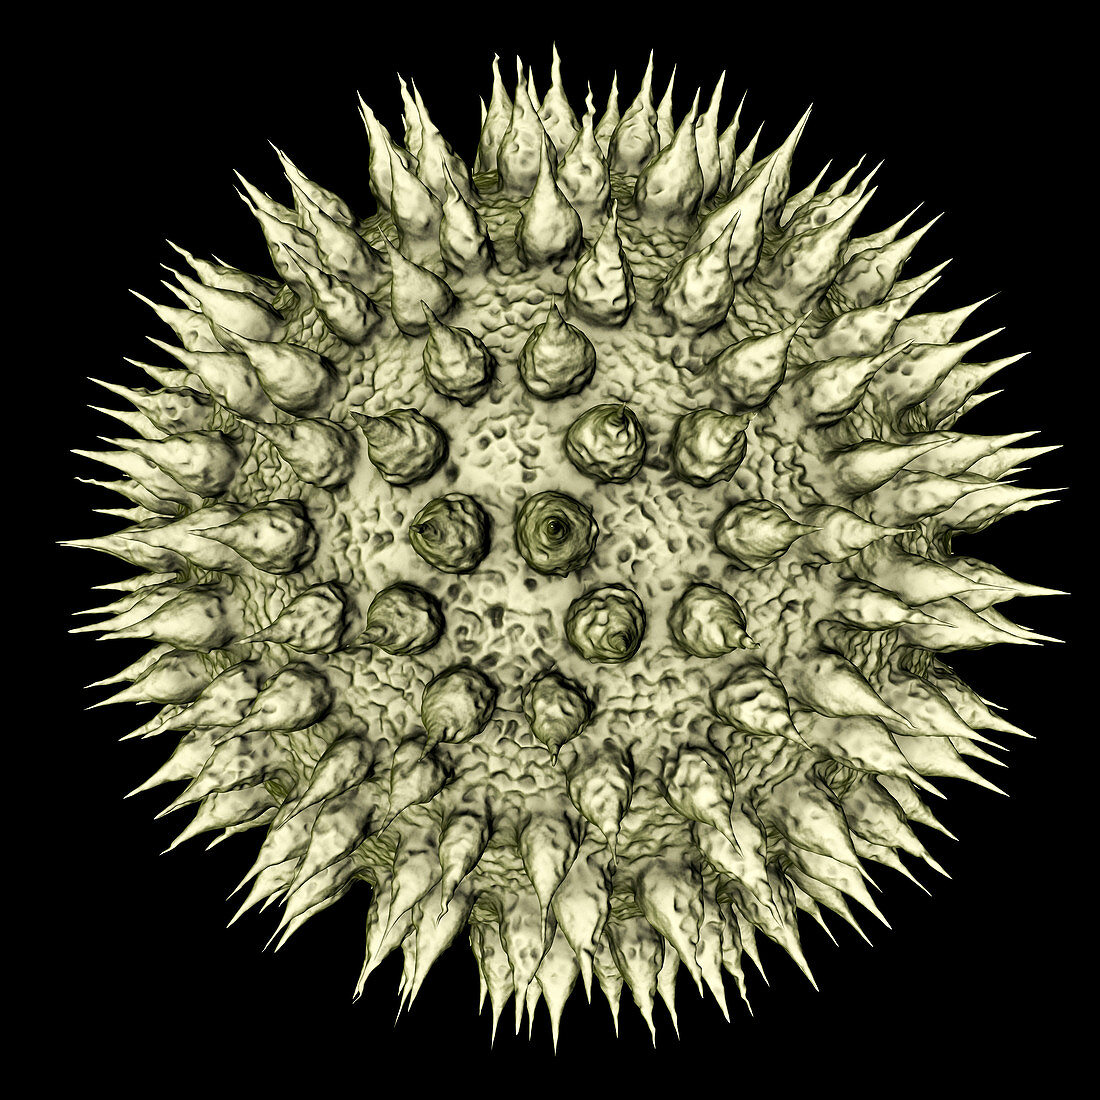 Pollen grains from different plants, illustration